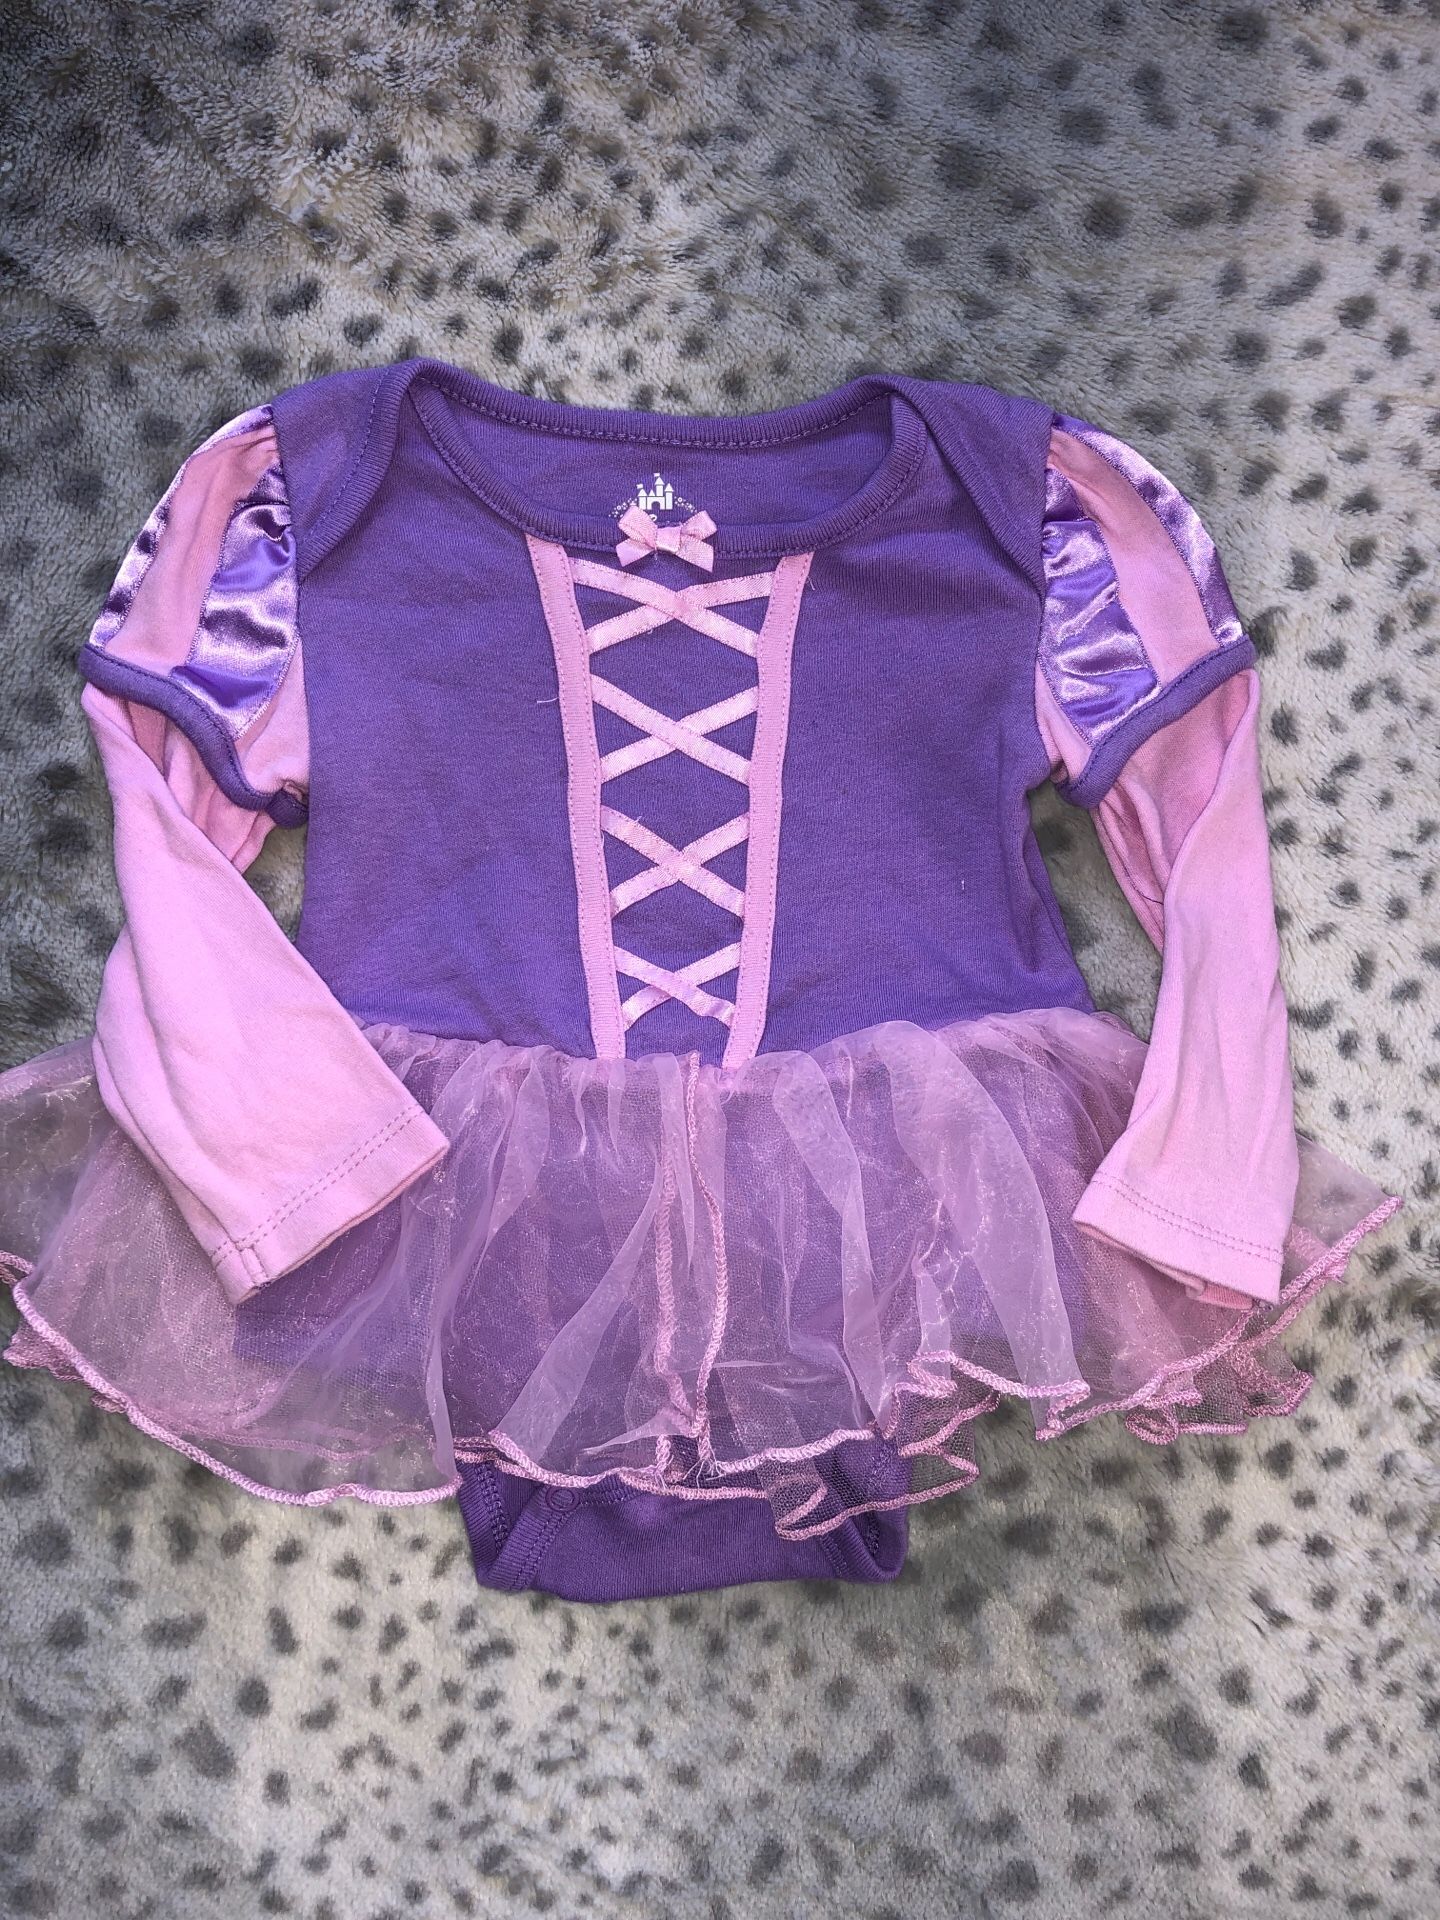 Disney Store Tangled Princess Rapunzel Onesie Costume Bodysuit Size 6-12 Months